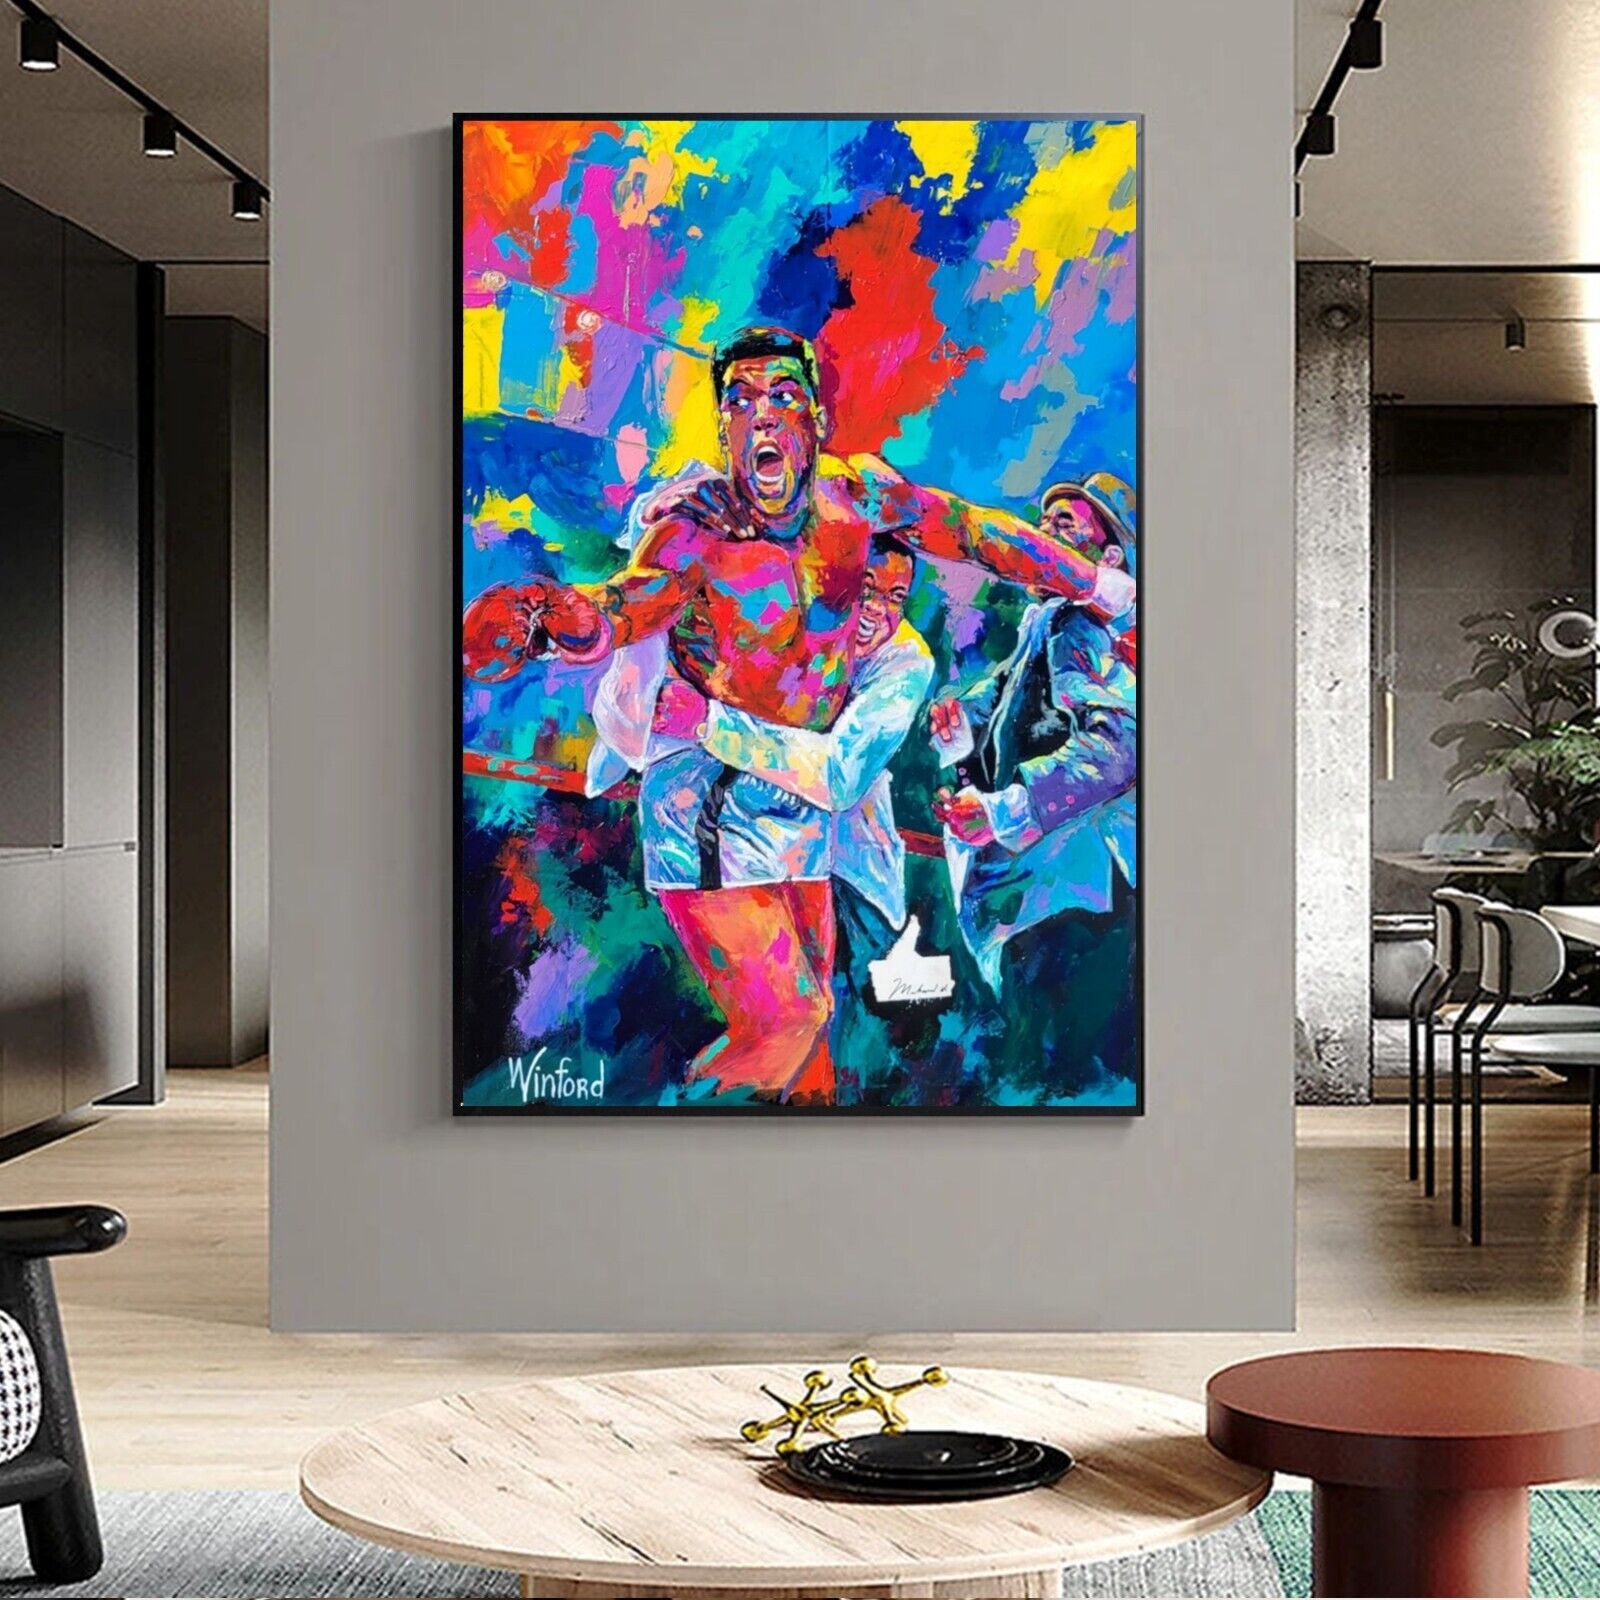 Sale Signed Muhammad Ali COA Handmade Painting Framed 48H X 36W 9,999 Now $2,995